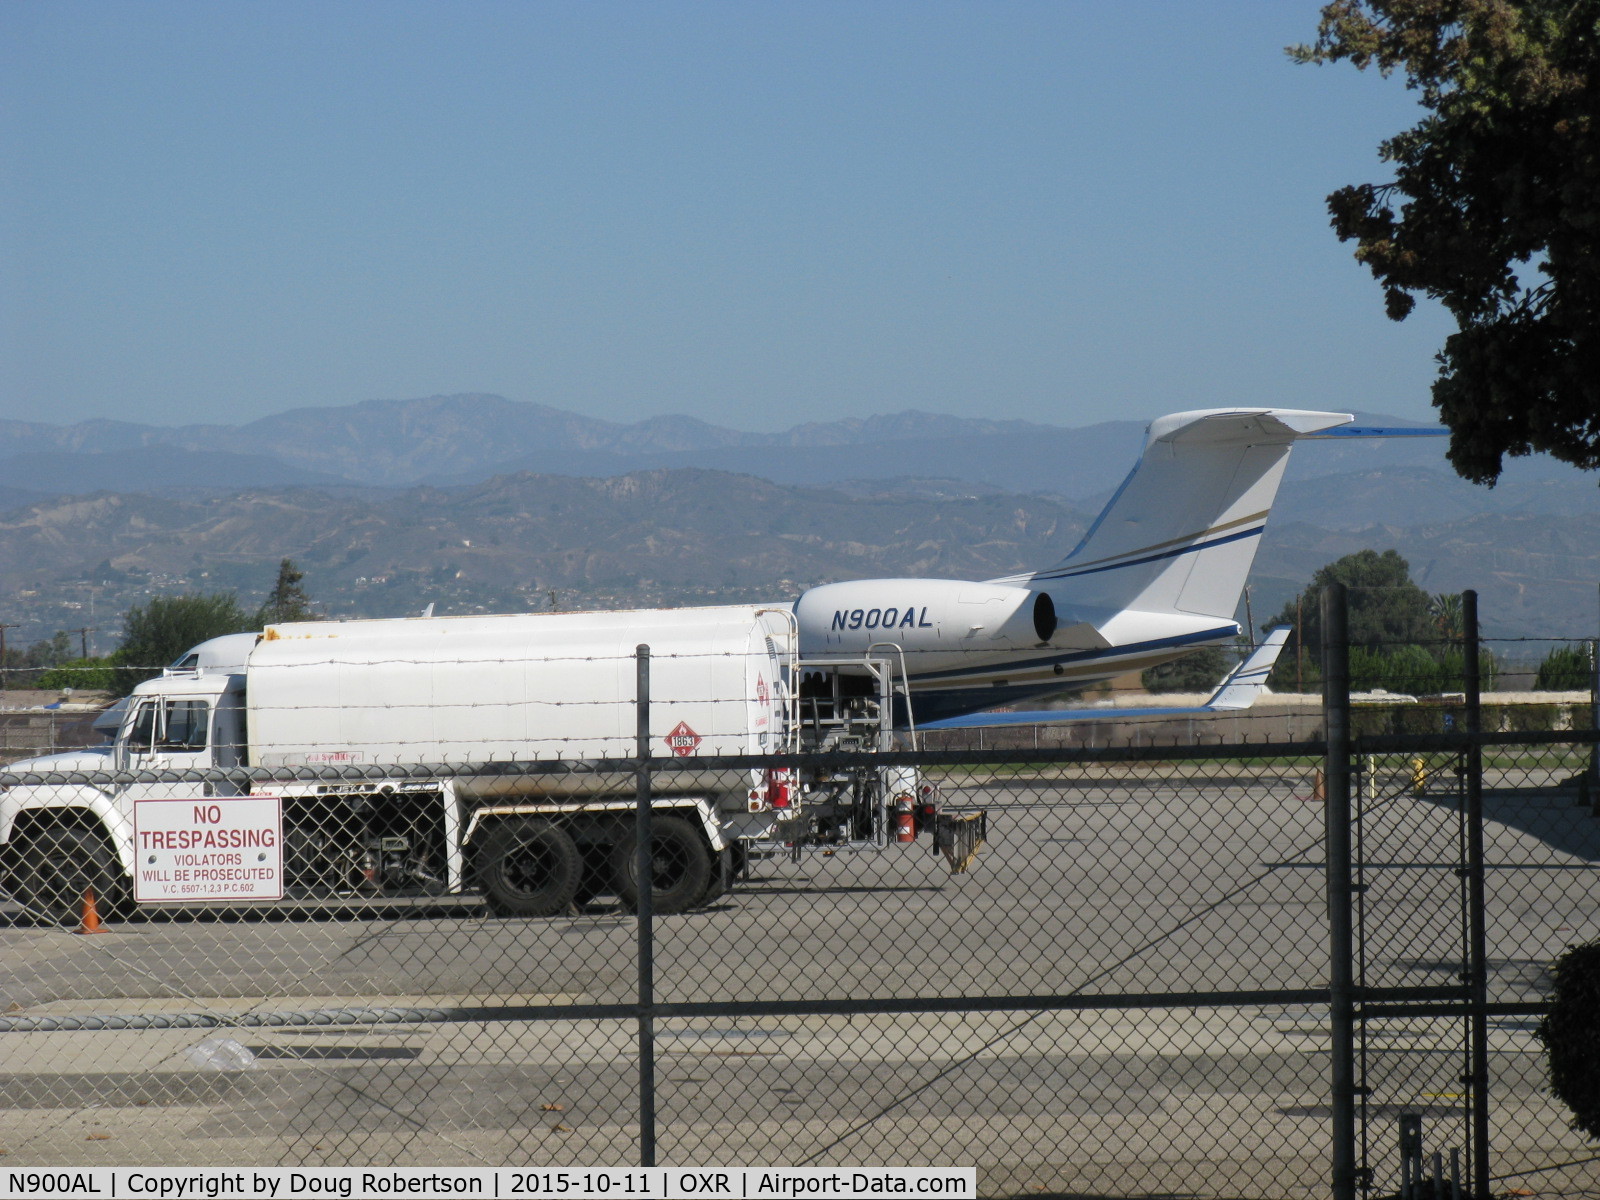 N900AL, 2014 Gulfstream Aerospace GV-SP (G550) C/N 5500, 2014 Gulfstream Aerospace GV-SP (G550), two ROLLS ROYCE DEUTSCHLAND BR710C4-11 Turbofans with FADEC, 15,385 lb st each. of ABBOTT LABORATORIES INC. At OXR Heavies Fuel Dock refueling.